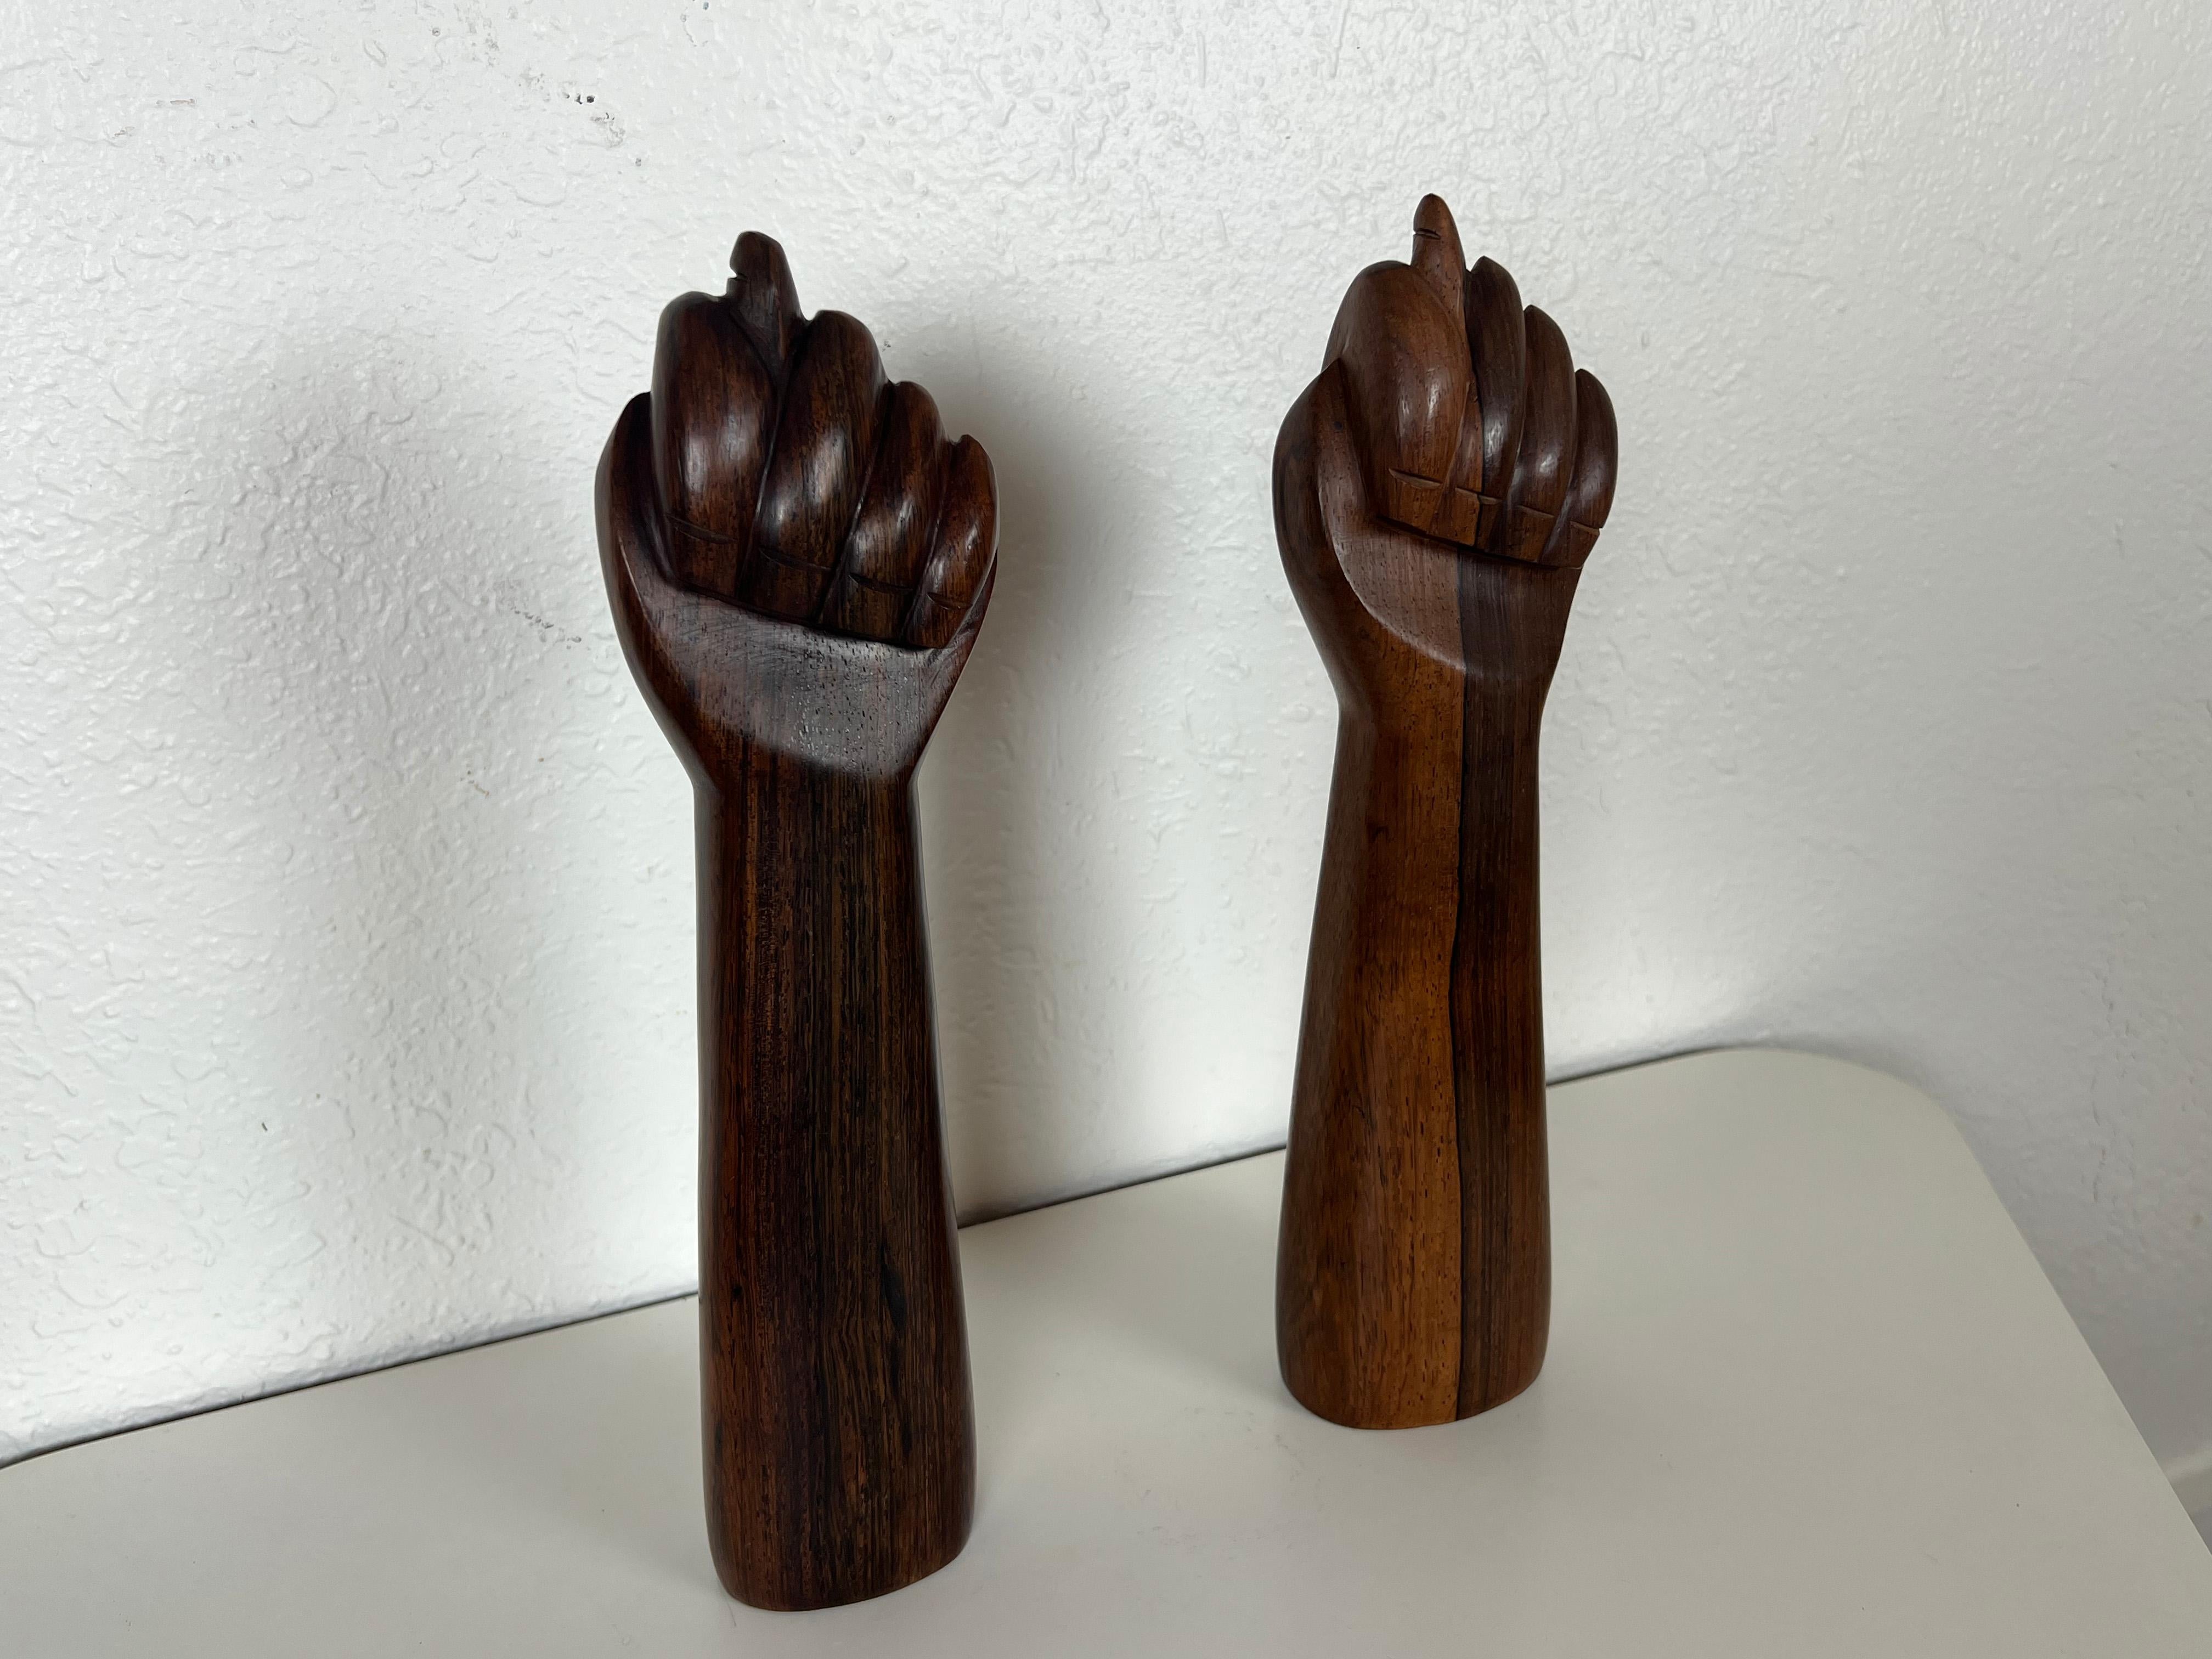 Mid-Century Modern Brazilian Jacaranda Rosewood Hand Sculptures by Jac-Arte - a Pair